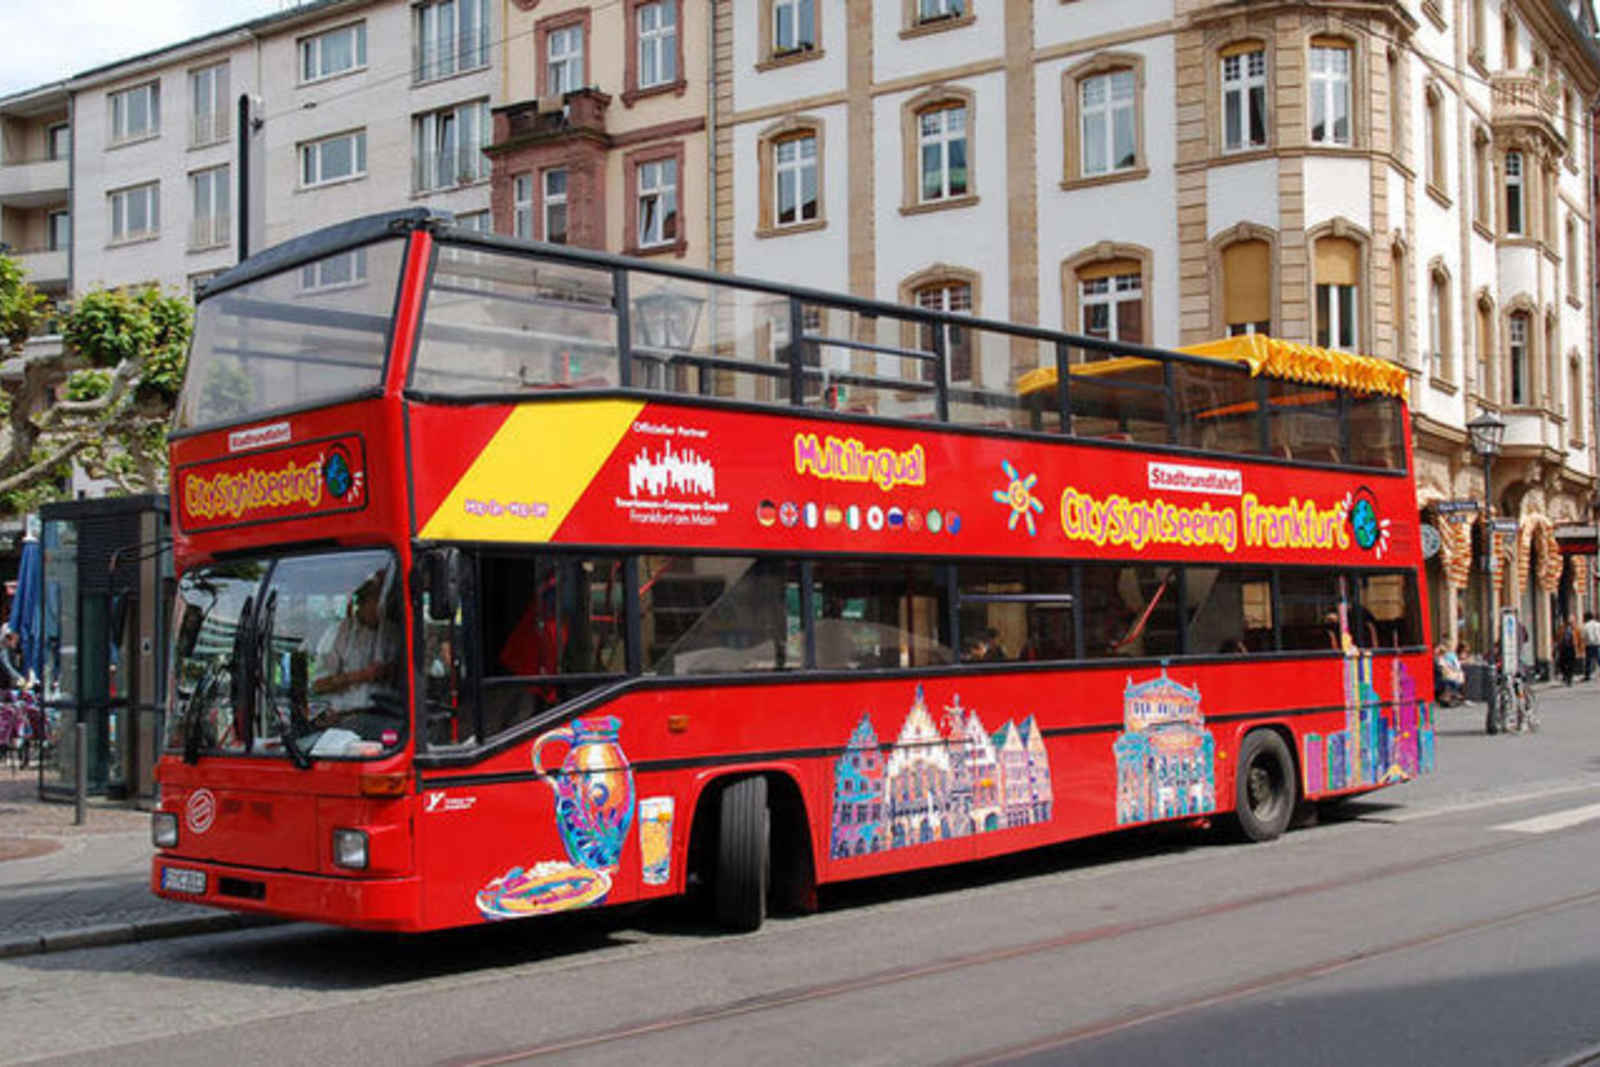 big bus tours frankfurt